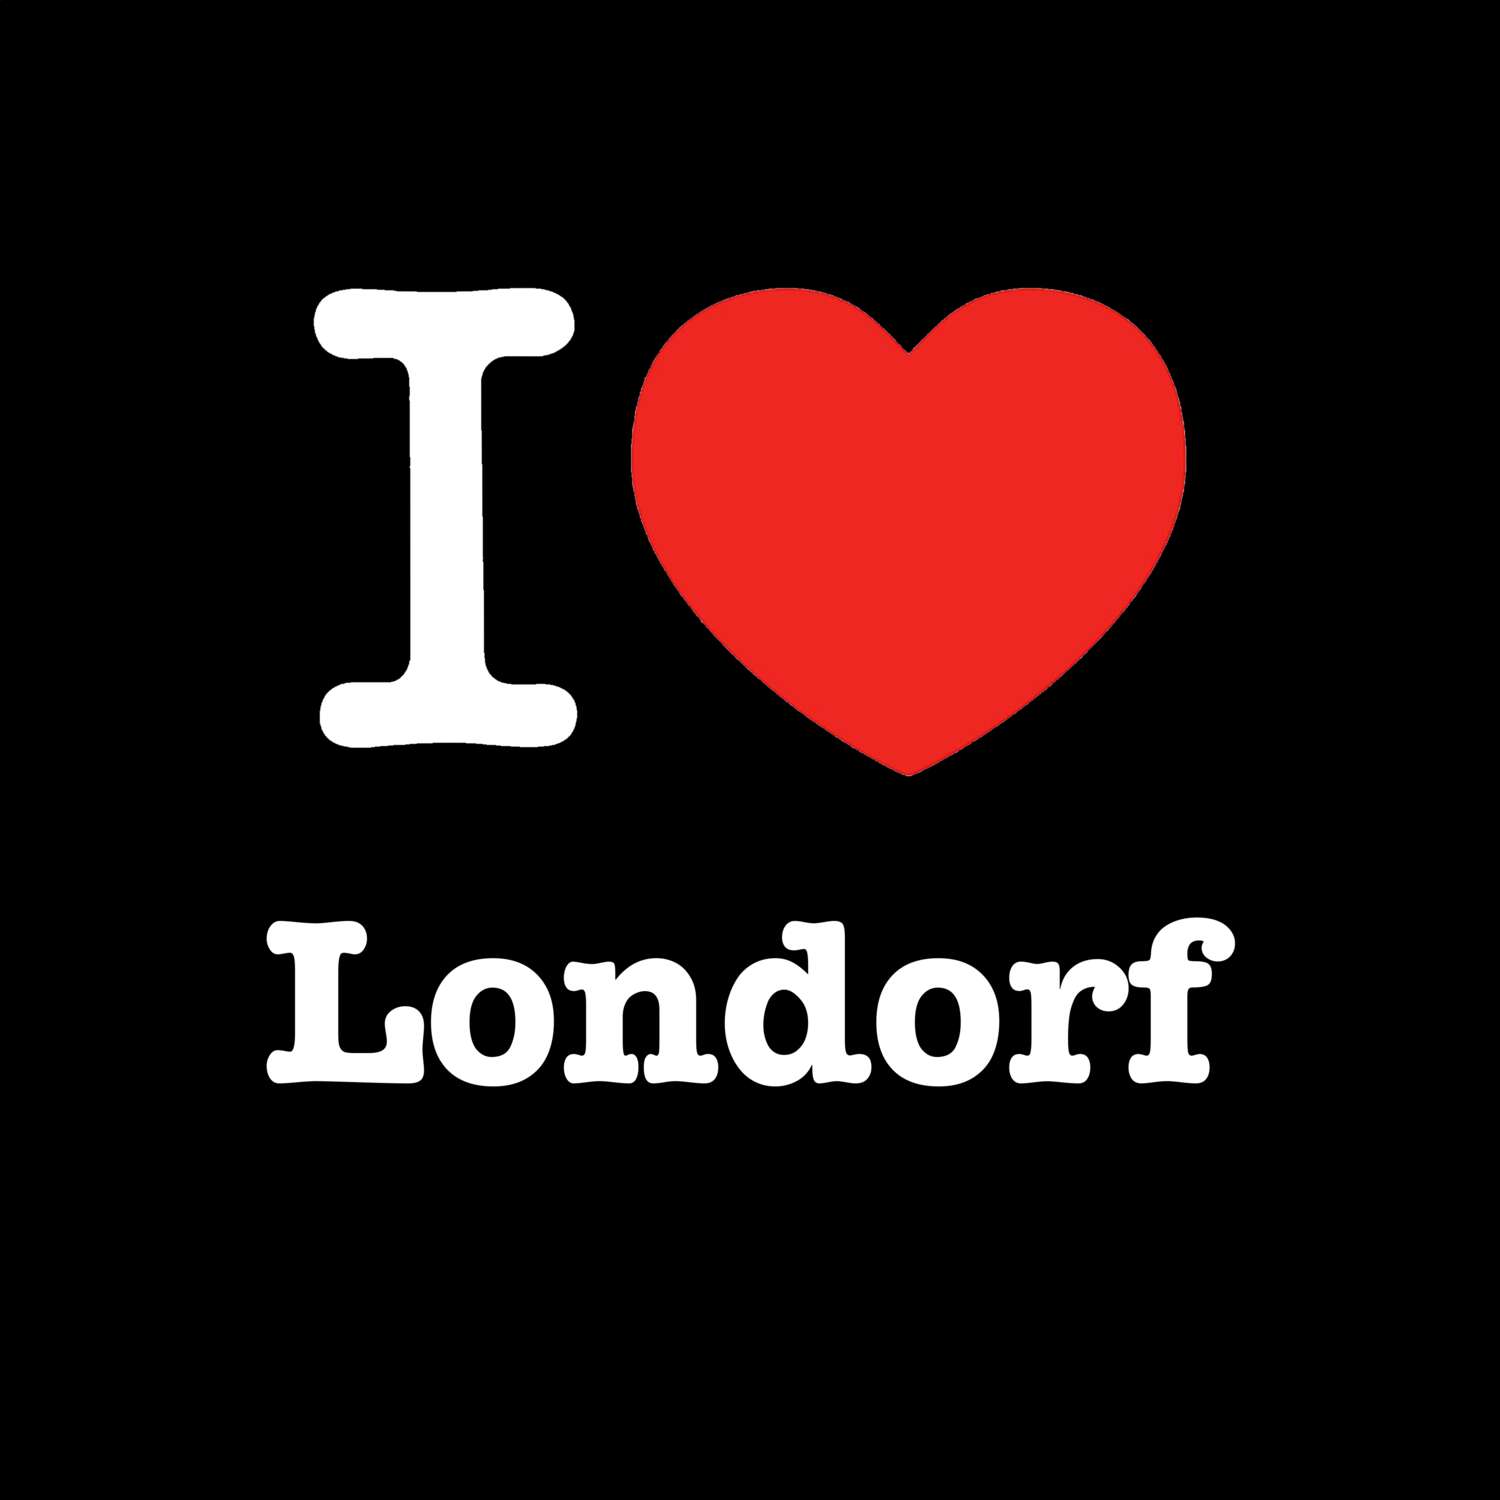 Londorf T-Shirt »I love«